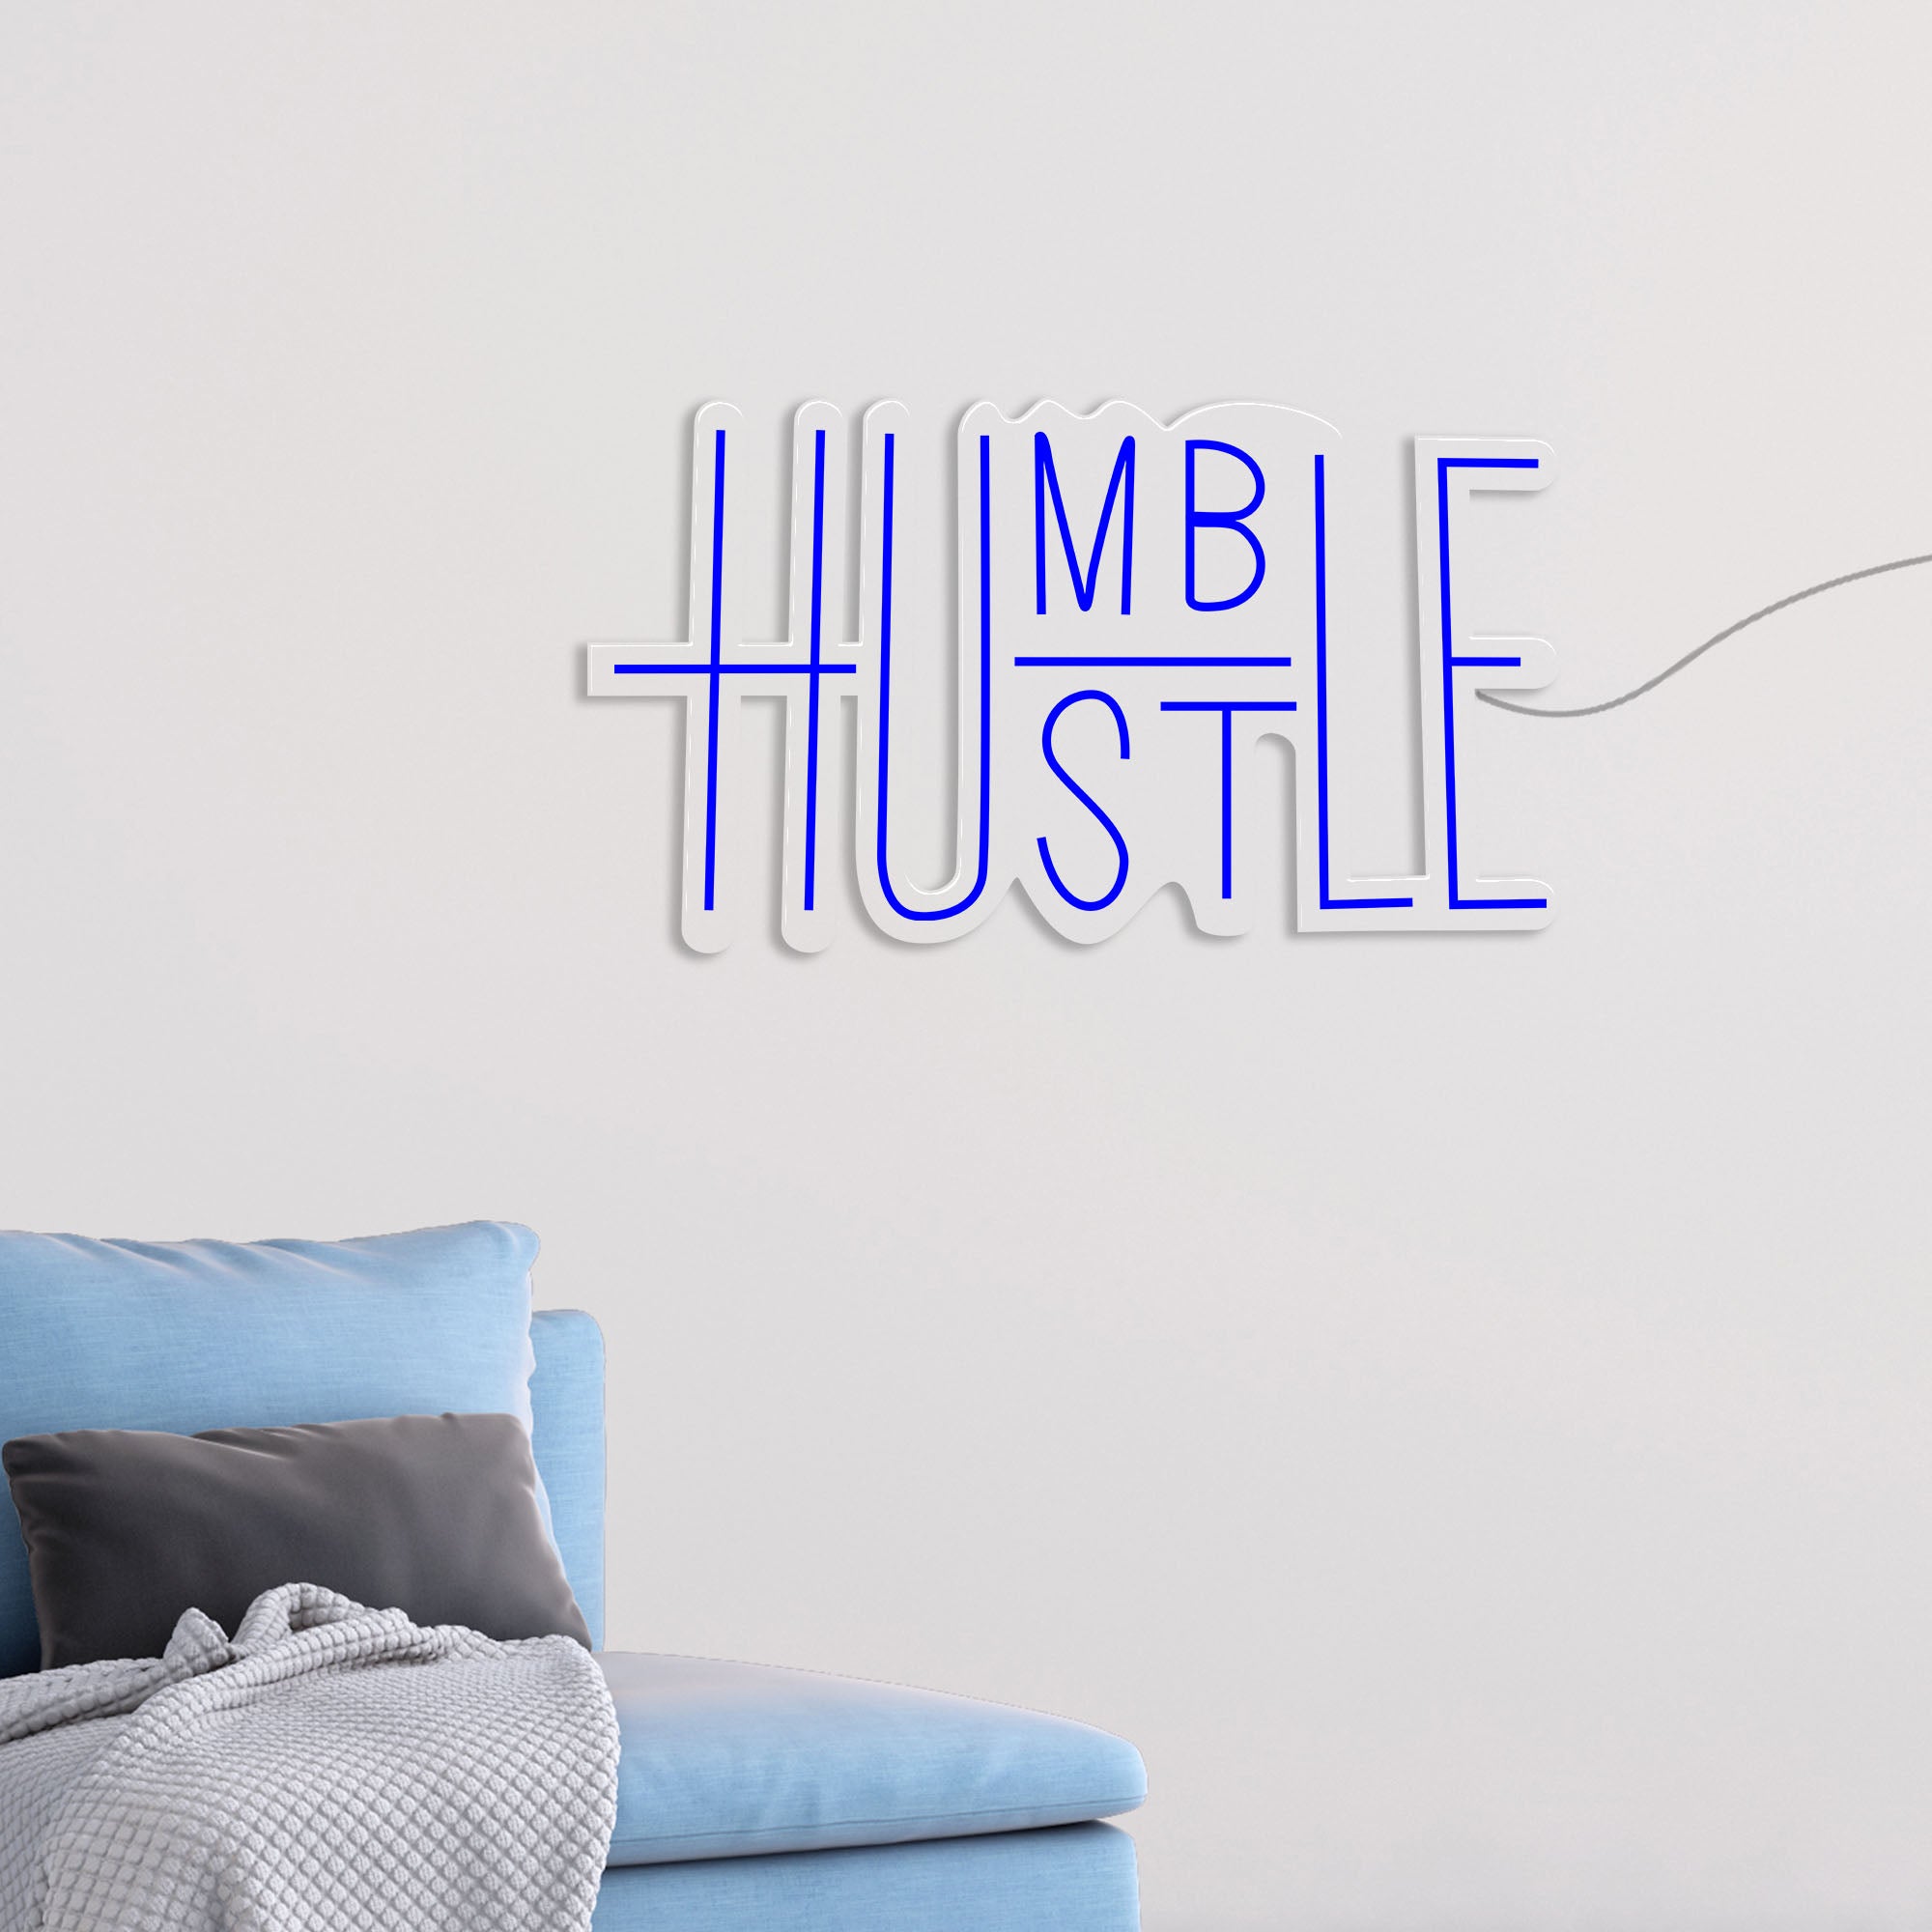 "Humble Hustle" Text Neon Sign LED Light